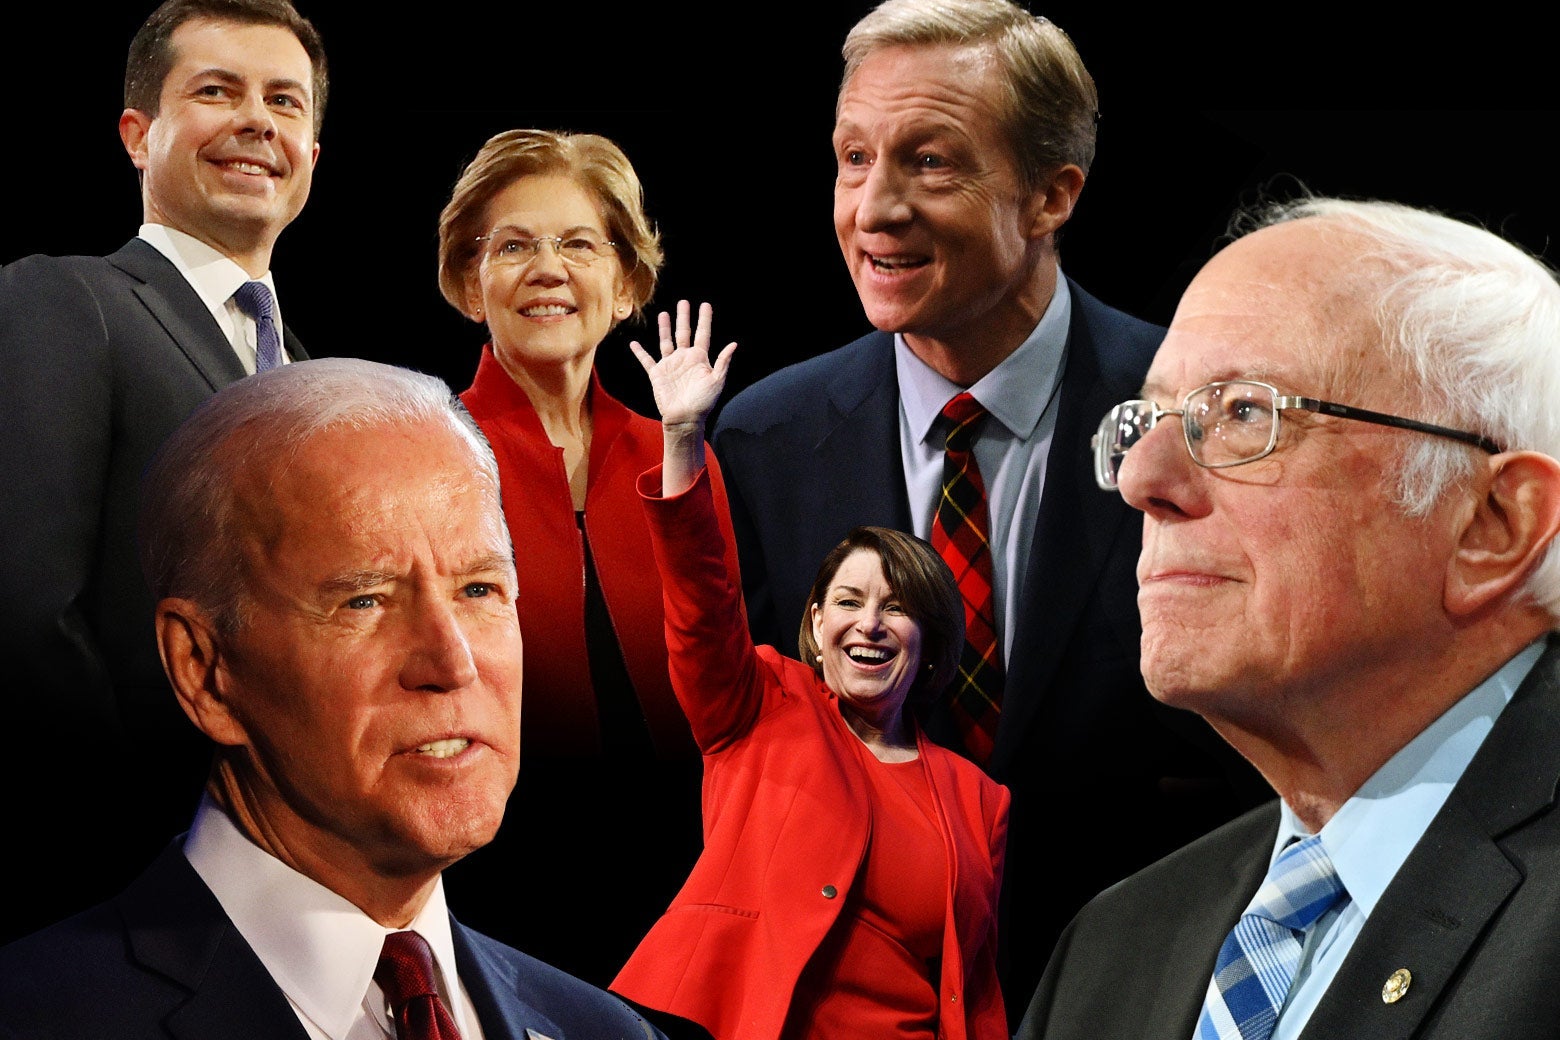 A collage of candidates. Clockwise from top left: Pete Buttigieg, Elizabeth Warren, Tom Steyer, Bernie Sanders, Amy Klobuchar, and Joe Biden.